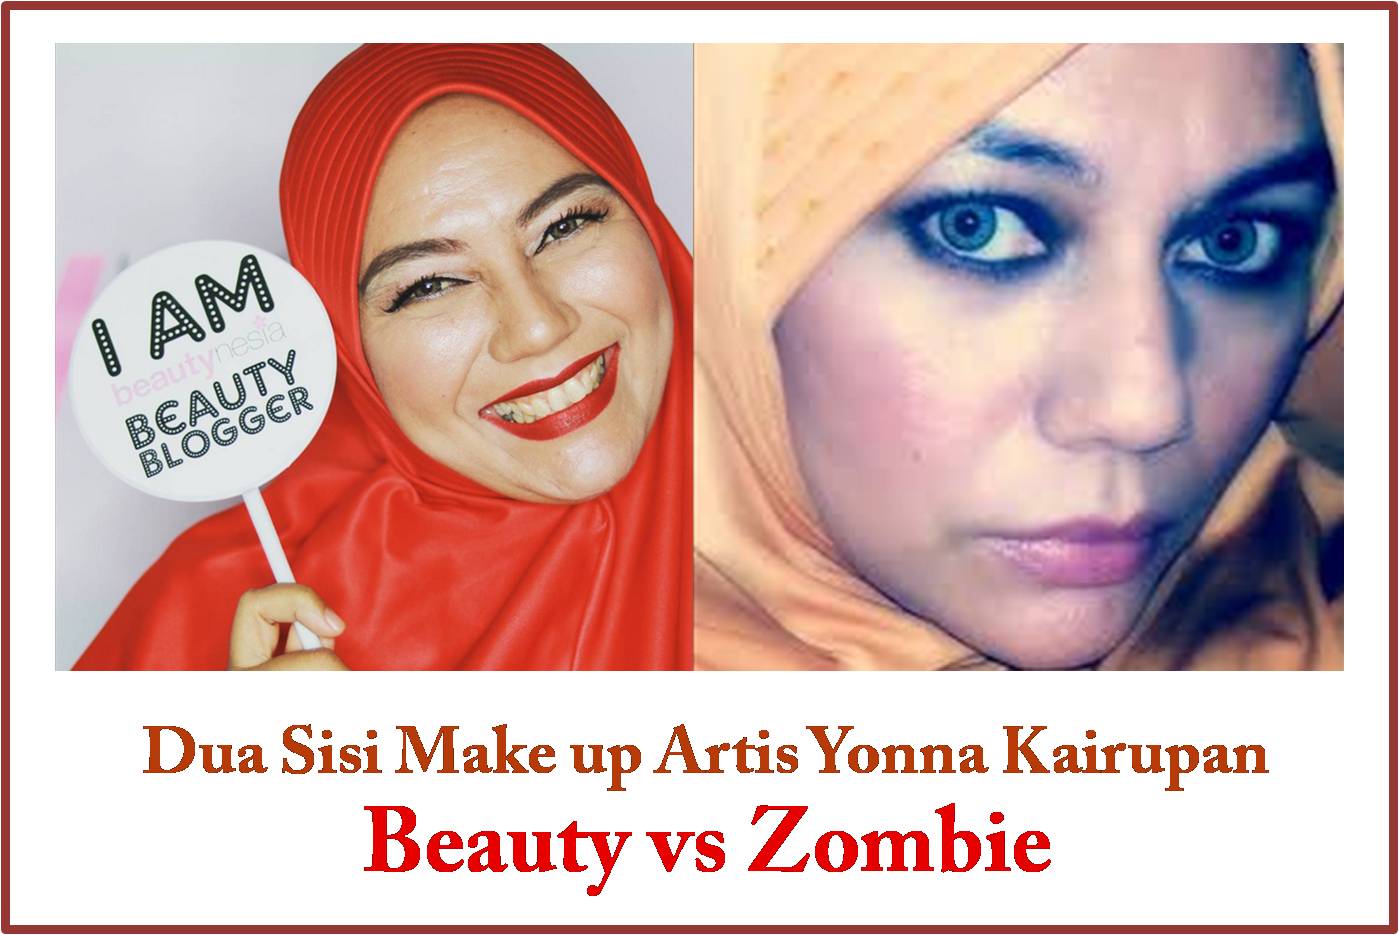 Make Up Artist Yonna Kairupan